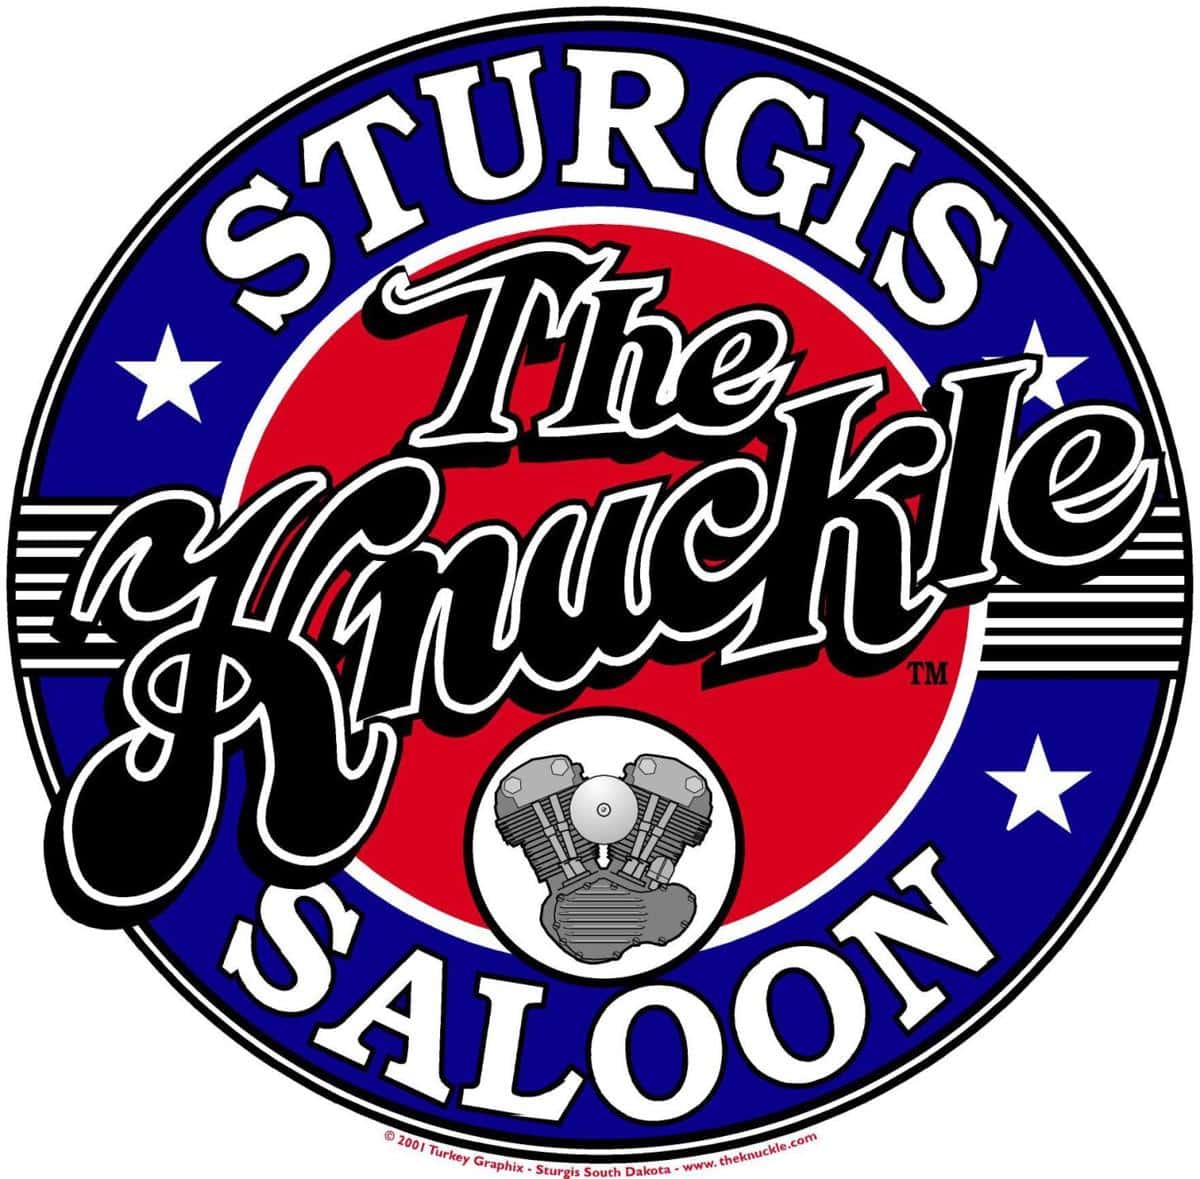 The Knuckle logo